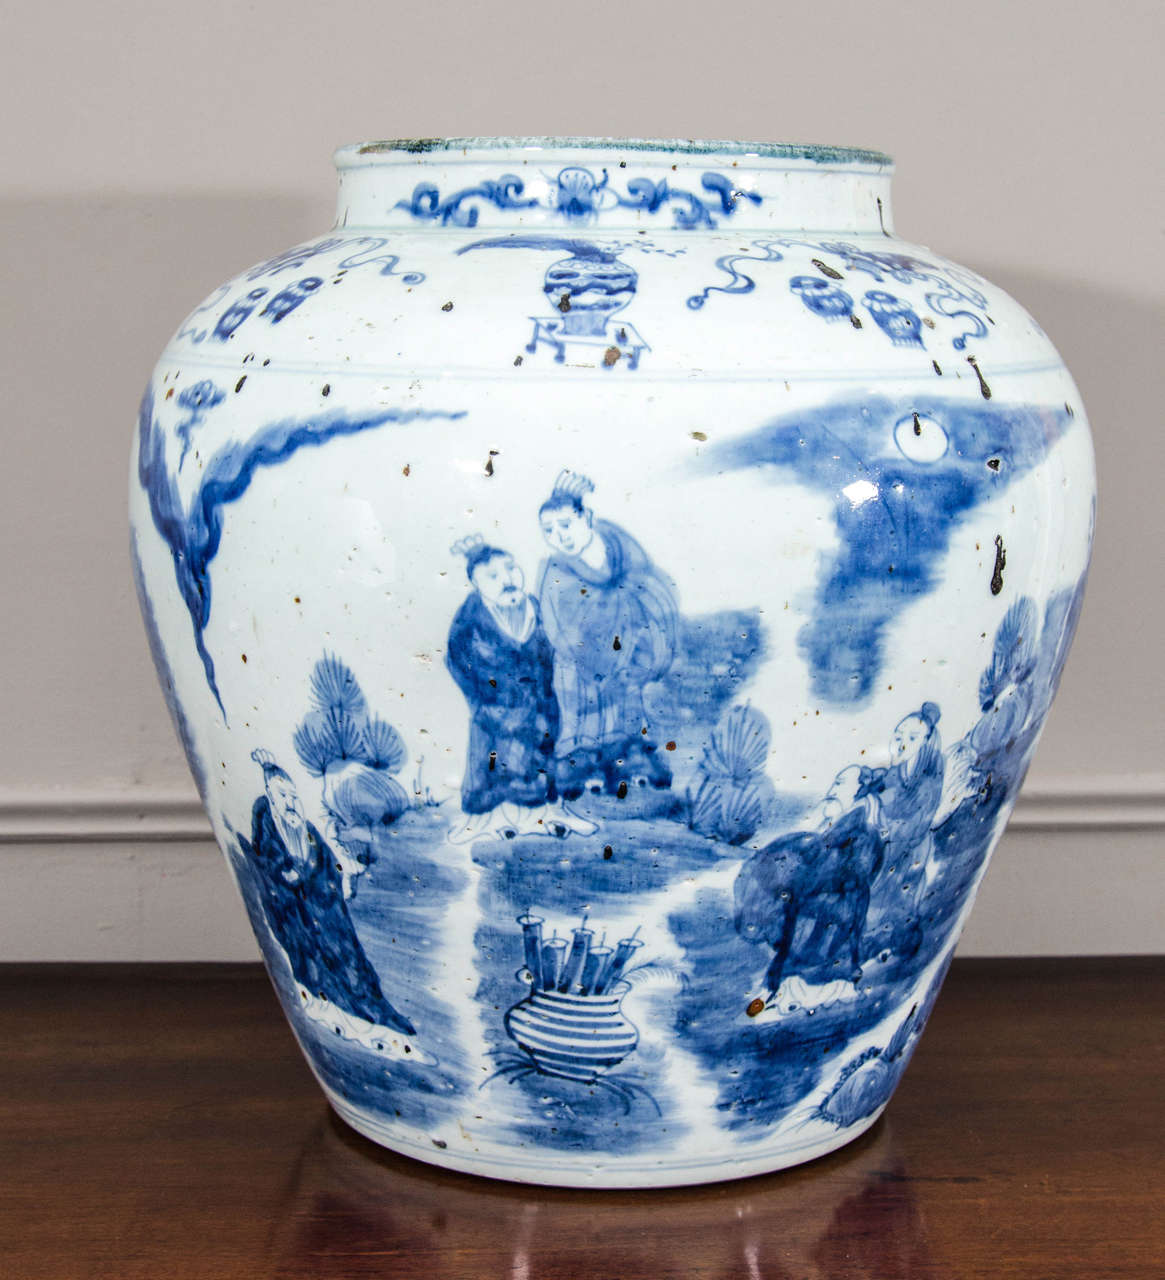 Blue and White Porcelain Vase For Sale at 1stdibs